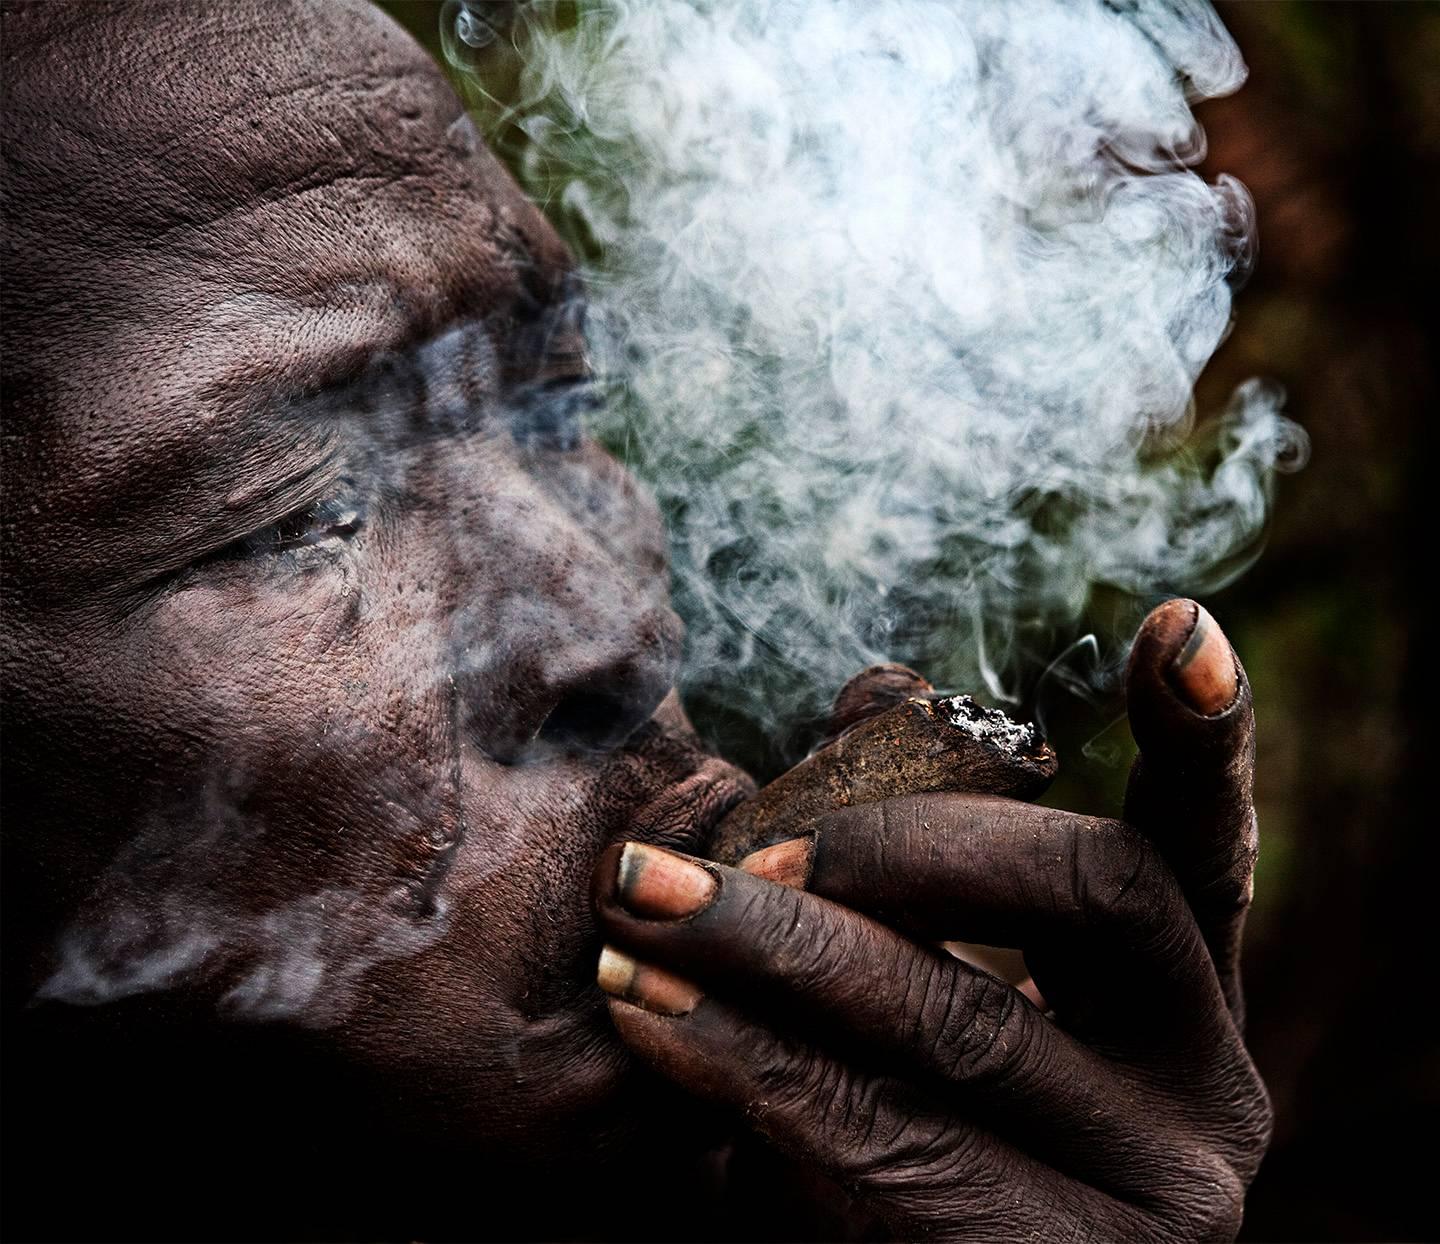 Joachim Schmeisser Portrait Photograph - Hadzabe, people, smoke, color photography, fire, africa, bushman